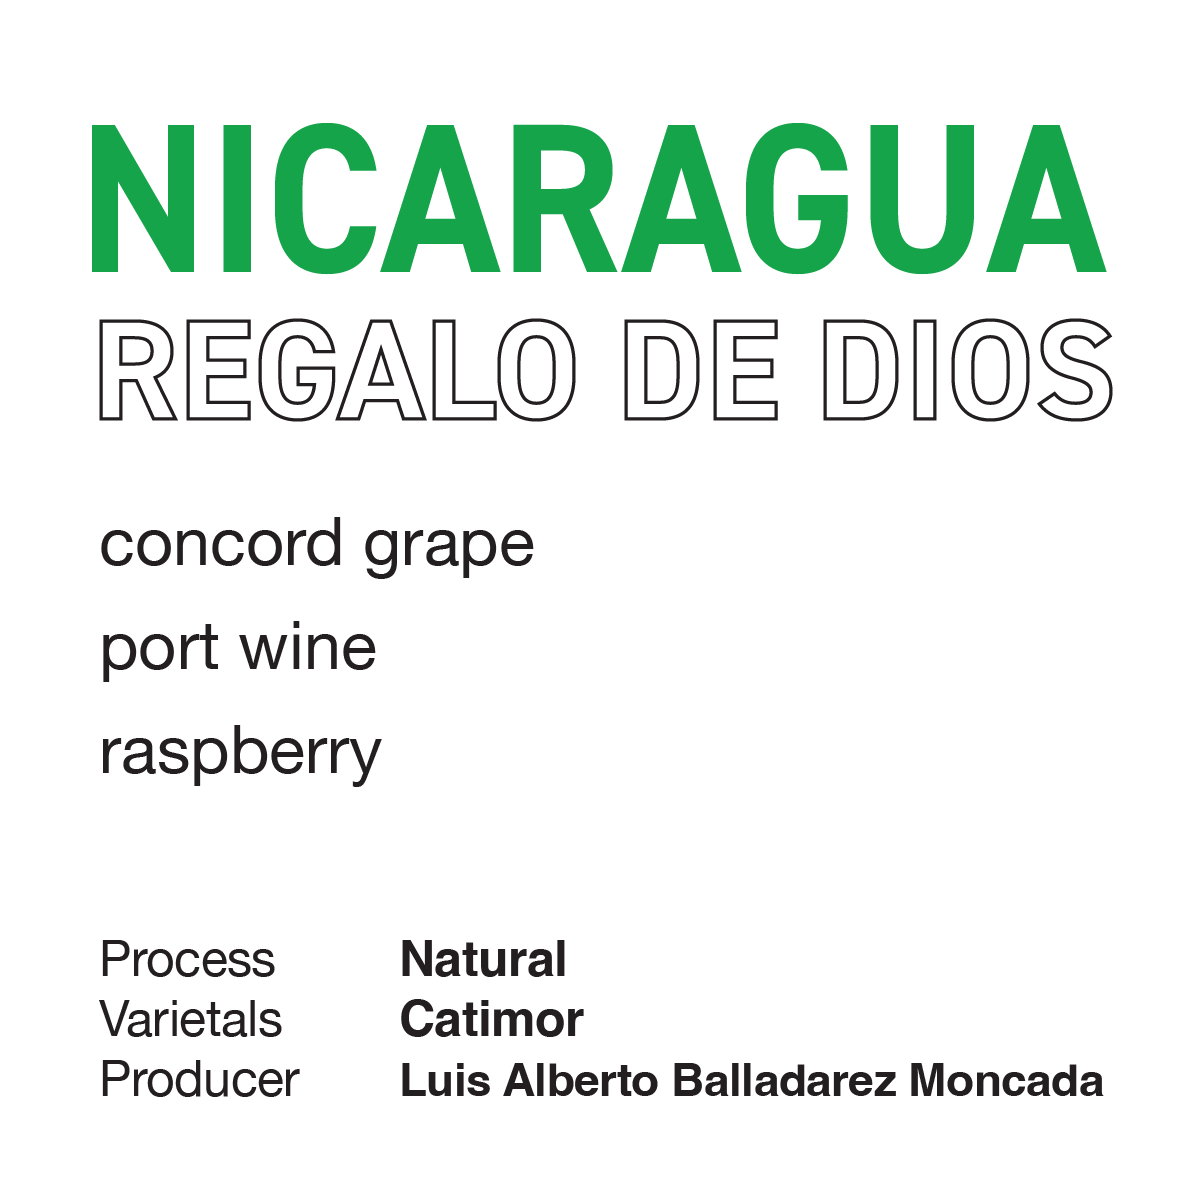 NICARAGUA Regalo de Dios